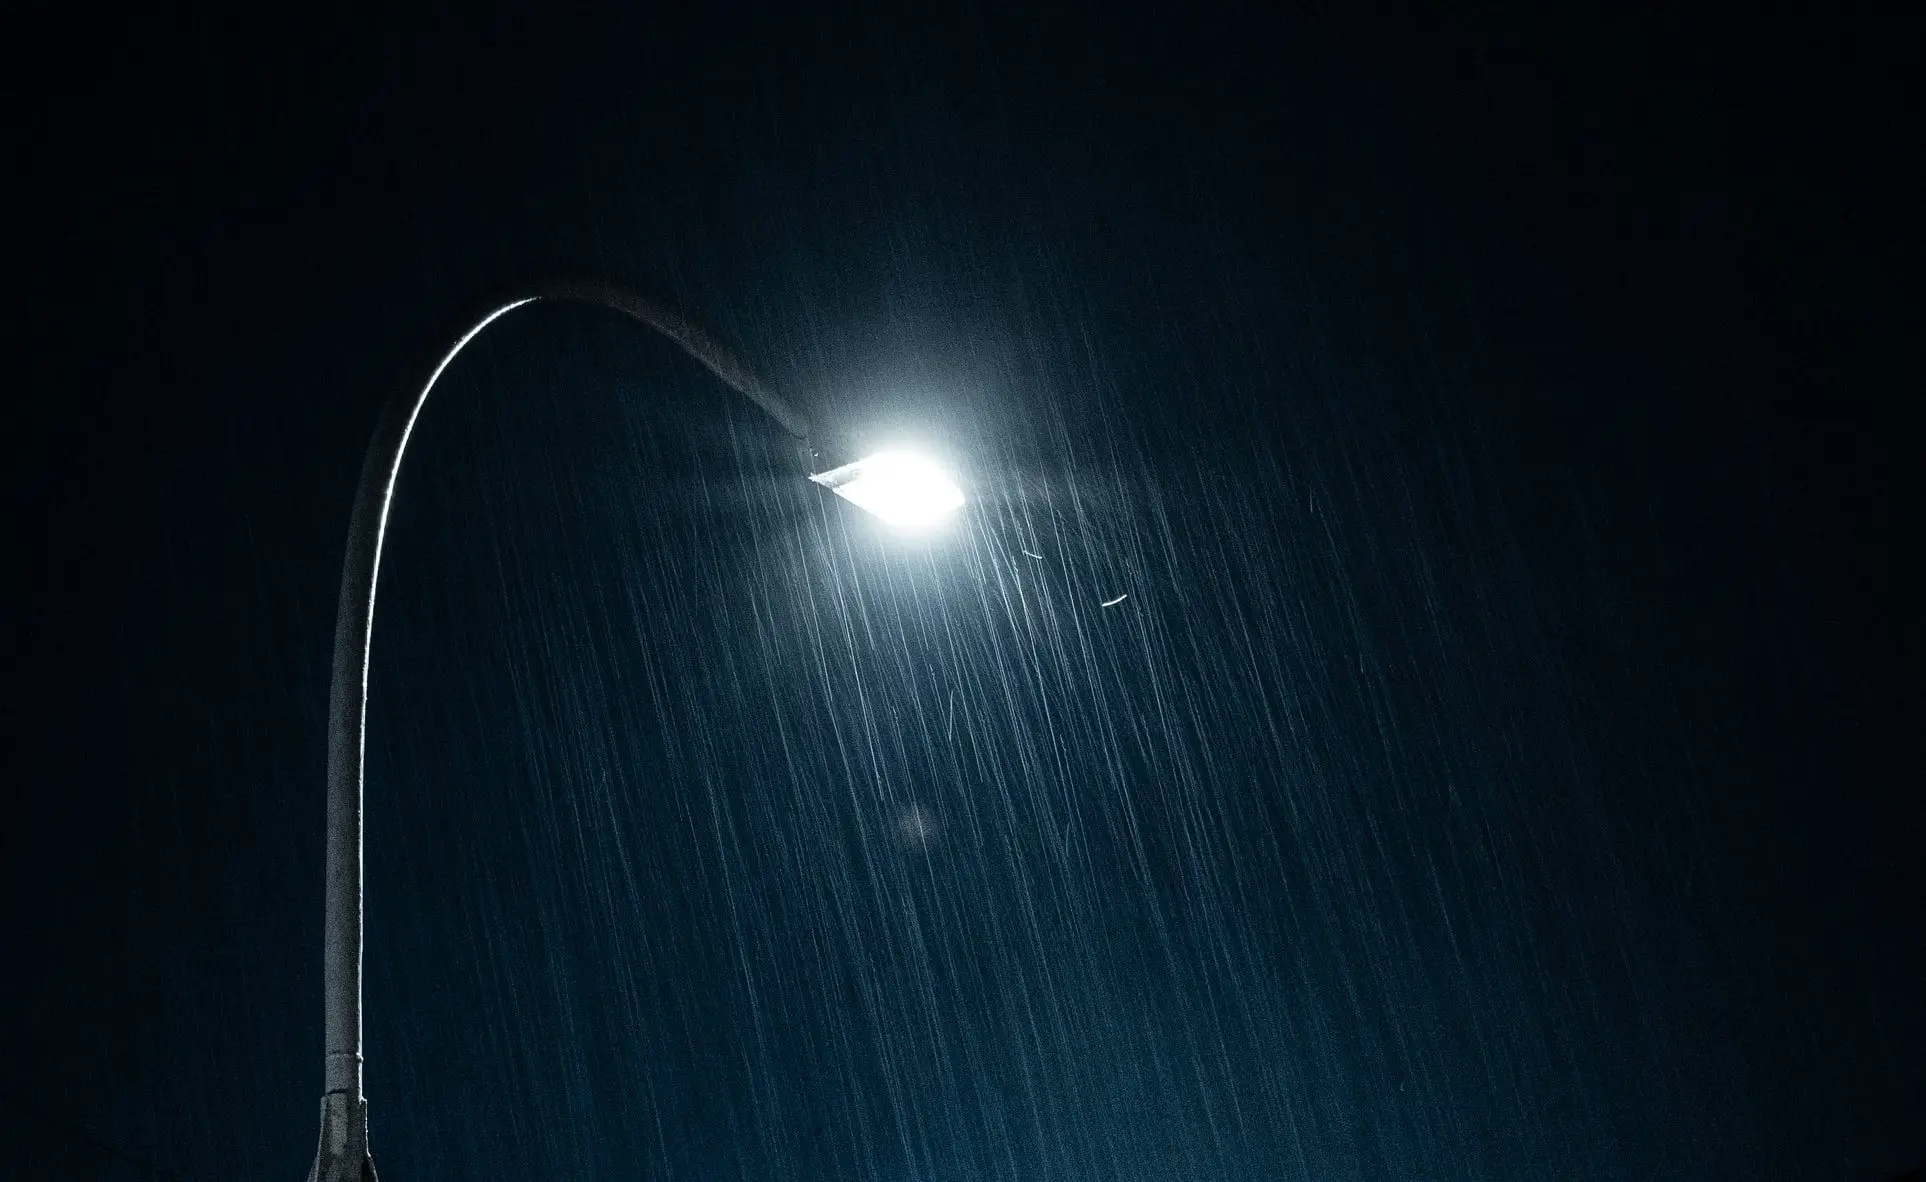 Streetlamp lighting rain in night sky